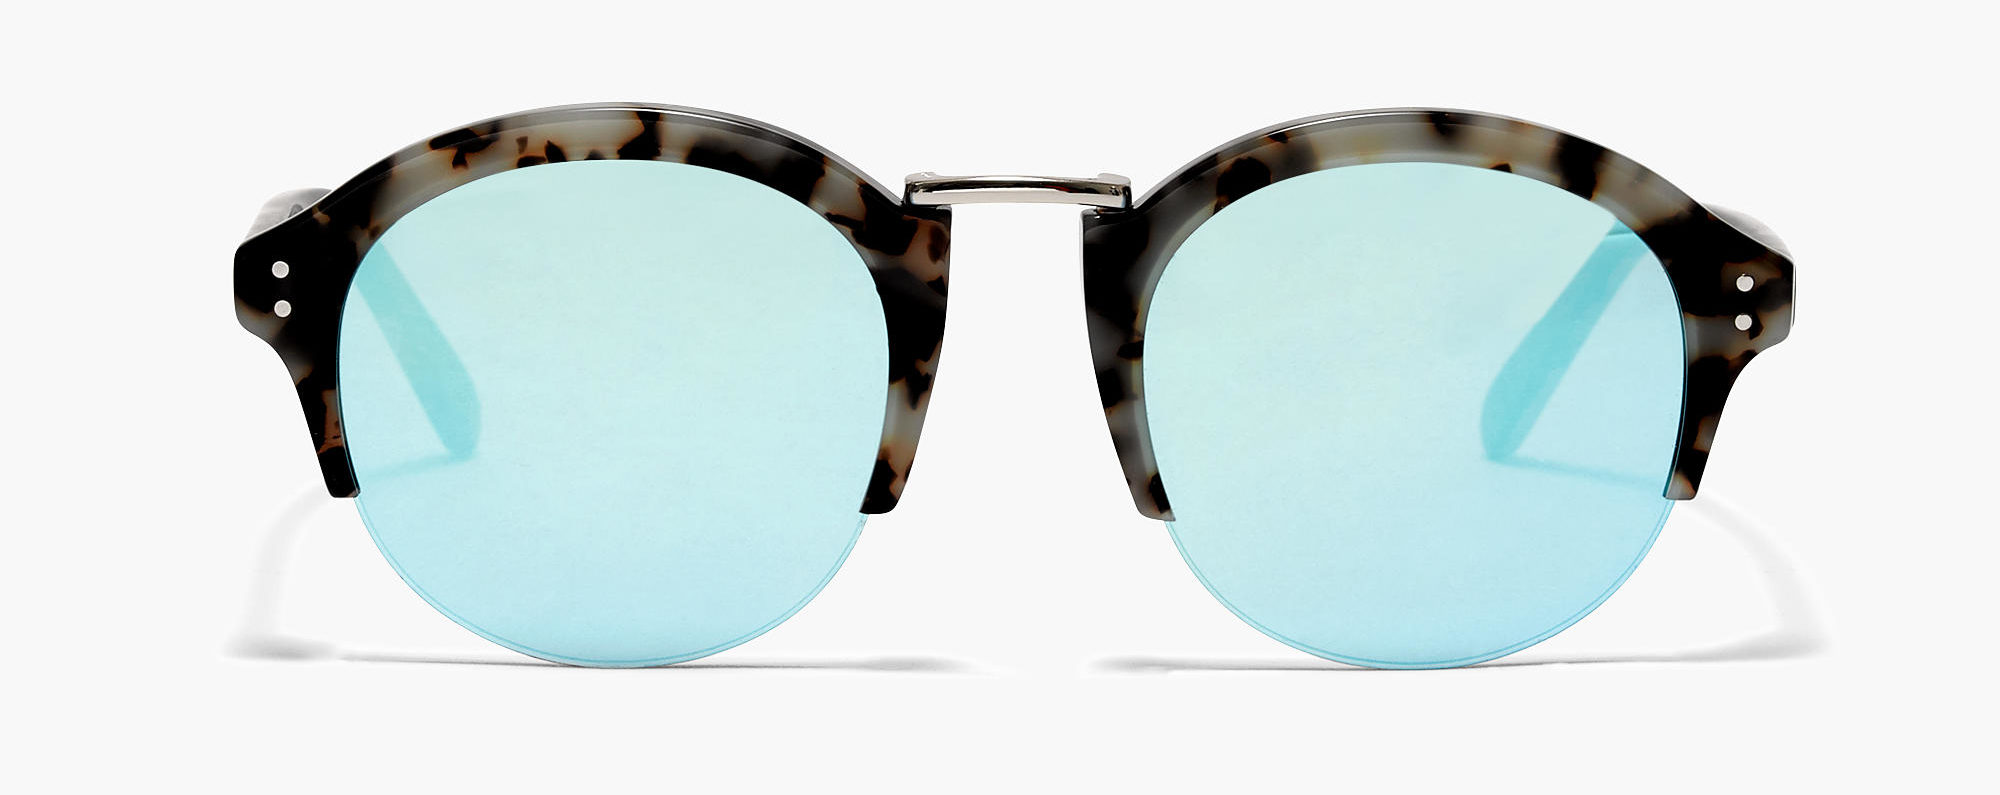 Madewell Memphis sunglasses with light blue frames